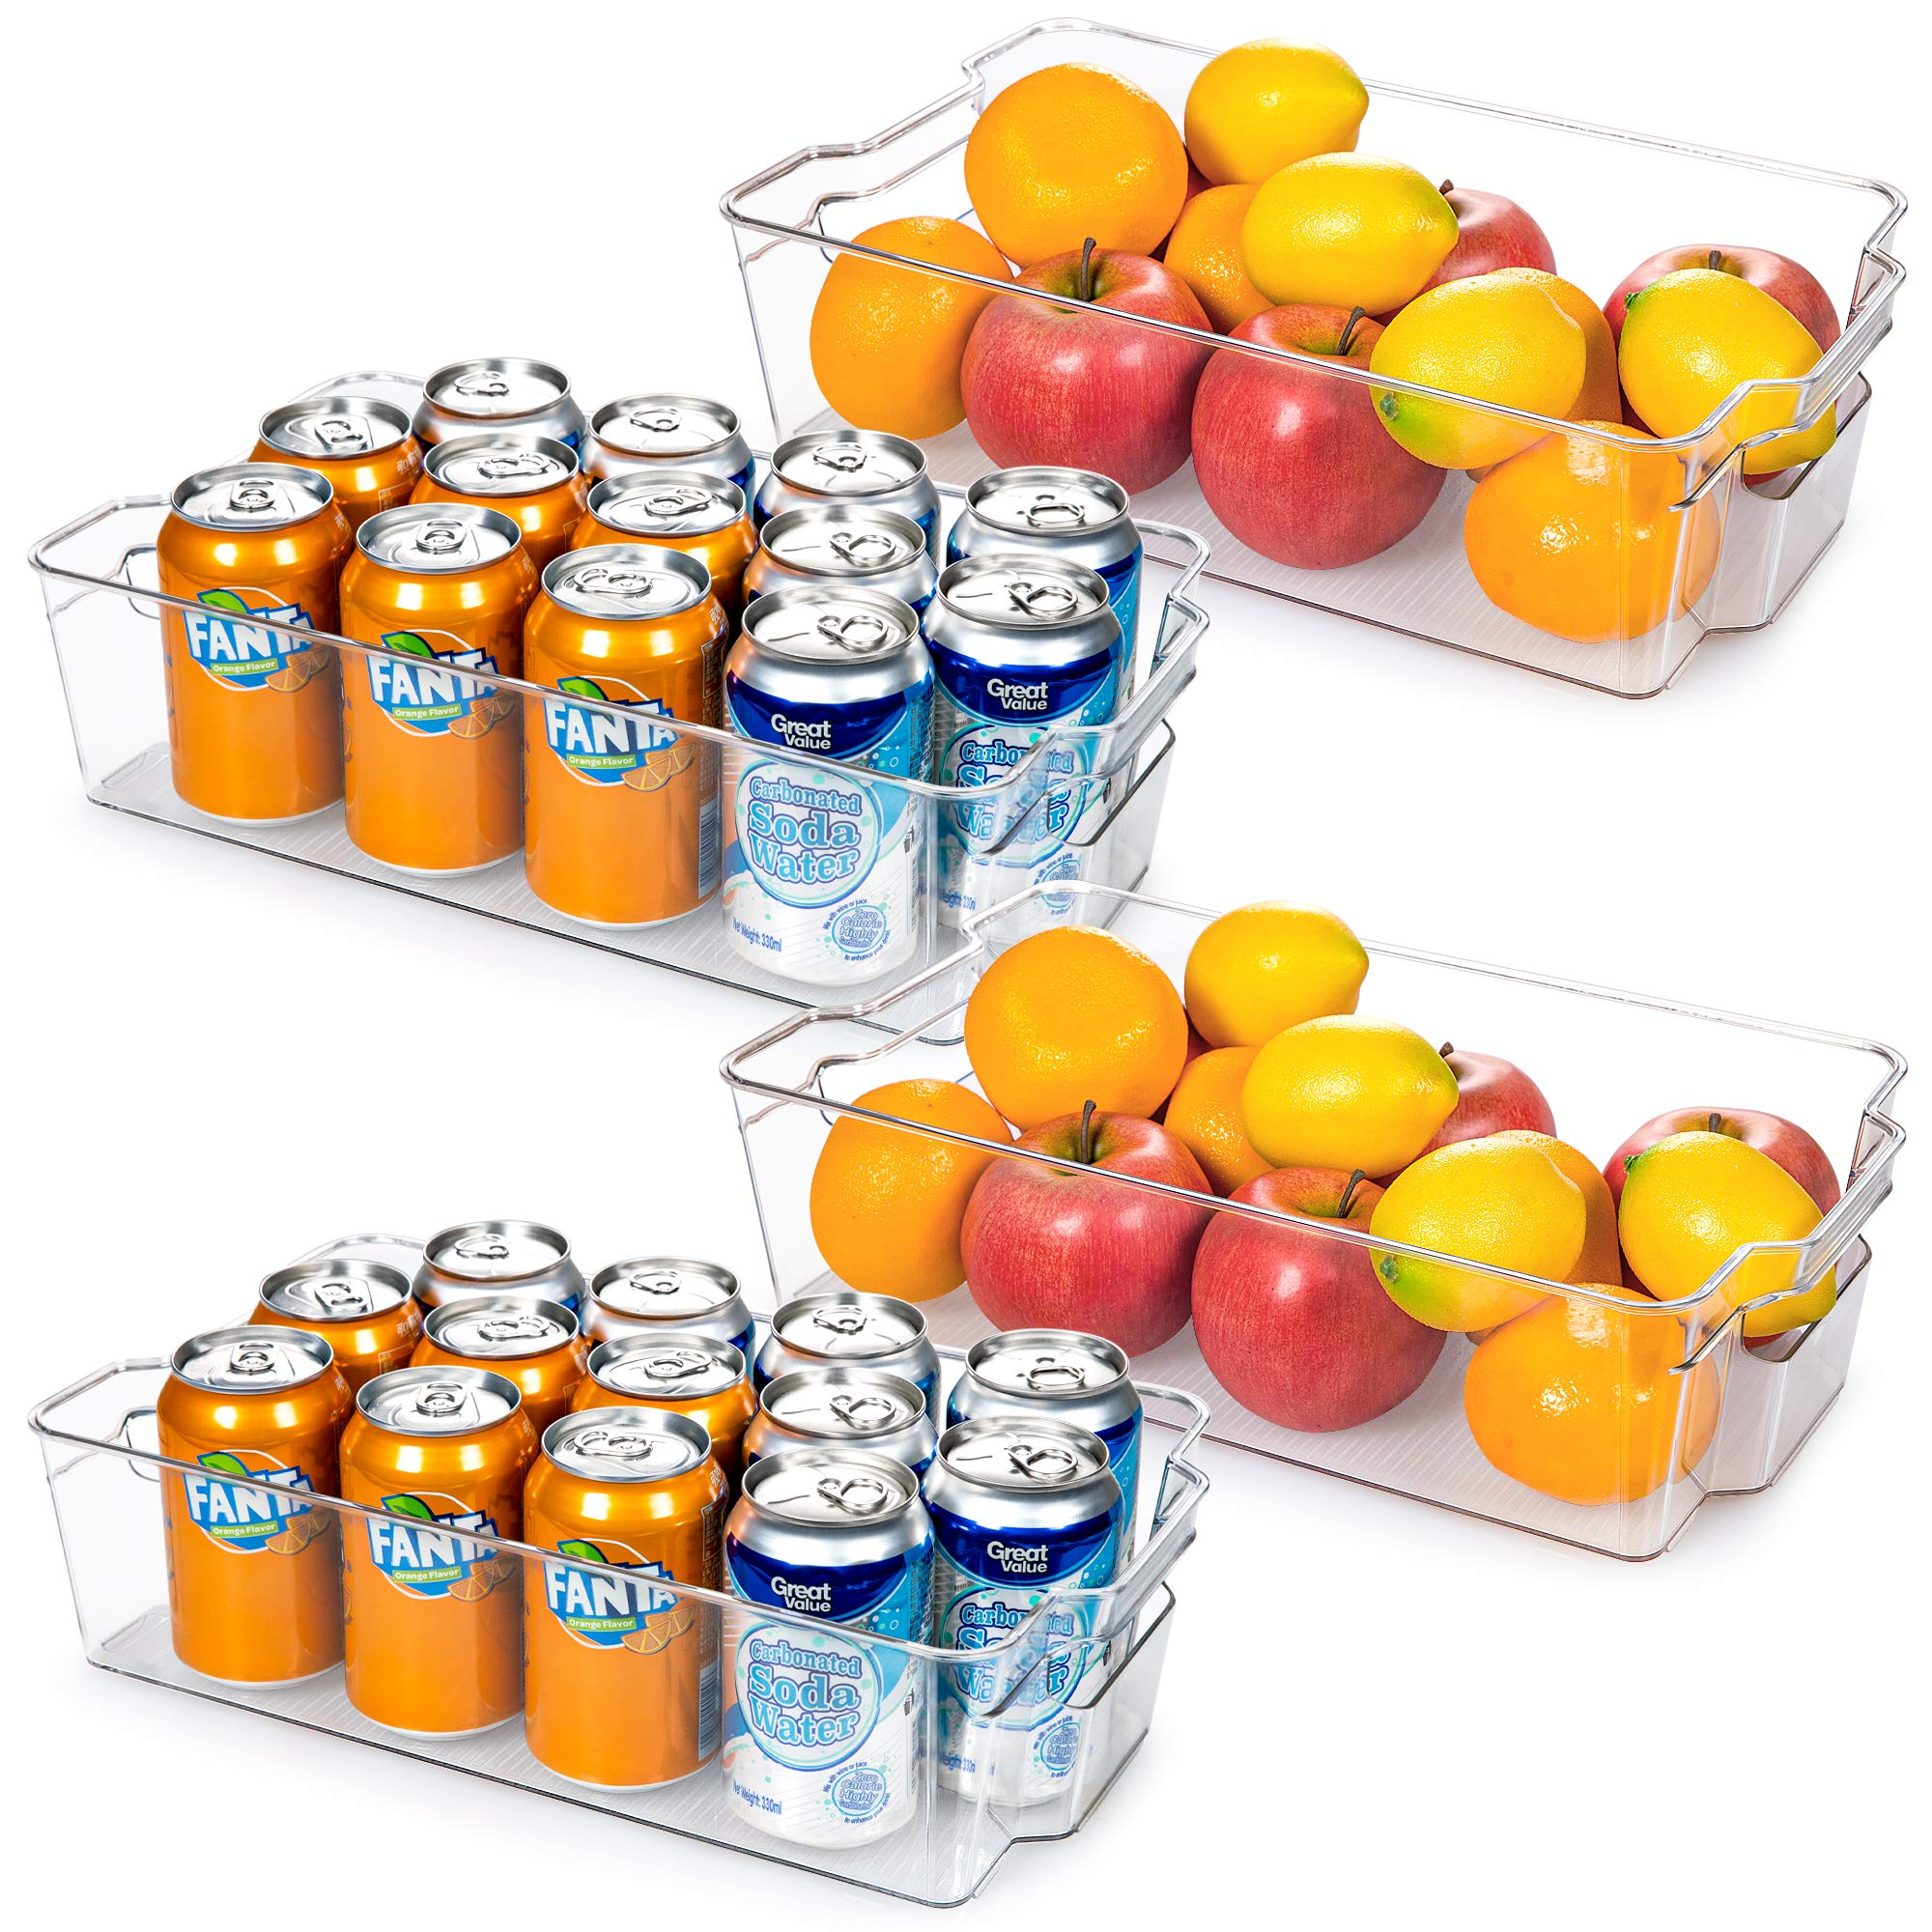  HOOJO Refrigerator Organizer Bins - 14pcs Clear Plastic Bins  For Fridge, Freezer, Kitchen Cabinet, Pantry Organization and Storage, BPA  Free Fridge Organizer, 12.5 Long-Medium: Home & Kitchen